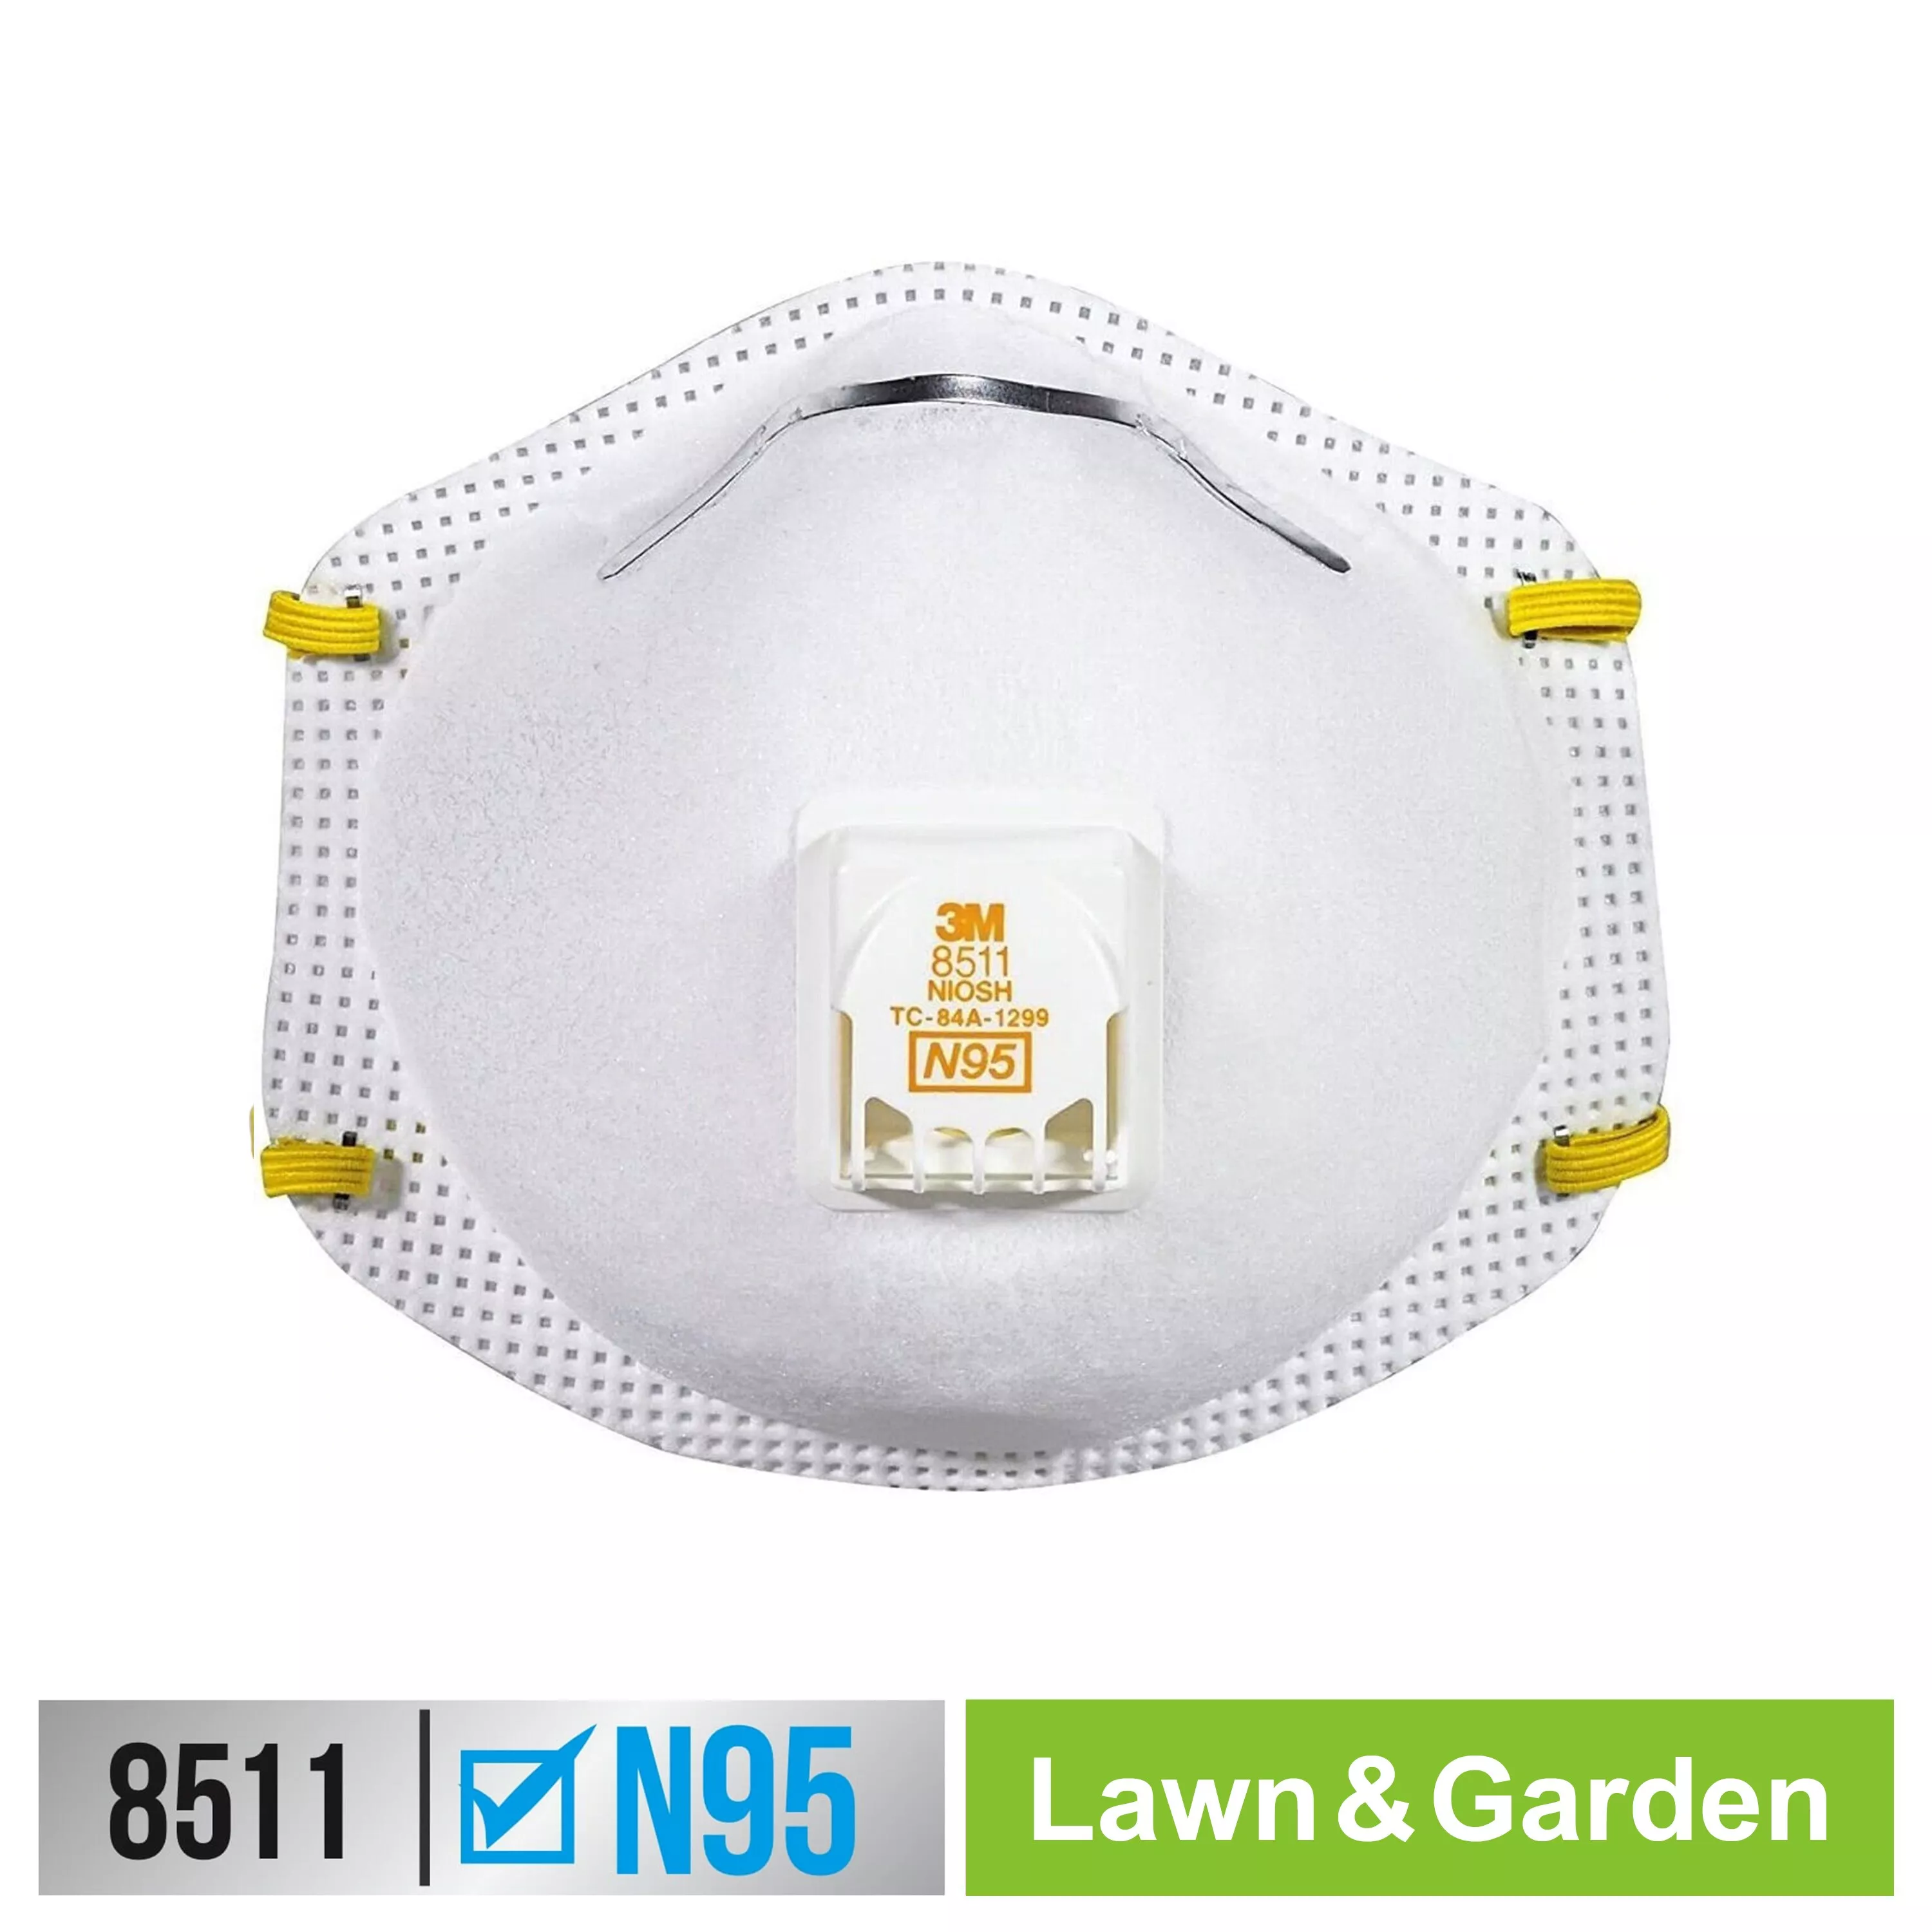 3M™ Lawn & Garden Valved Respirator 8511G2-C-PS, 2 each/pack, 6
packs/case